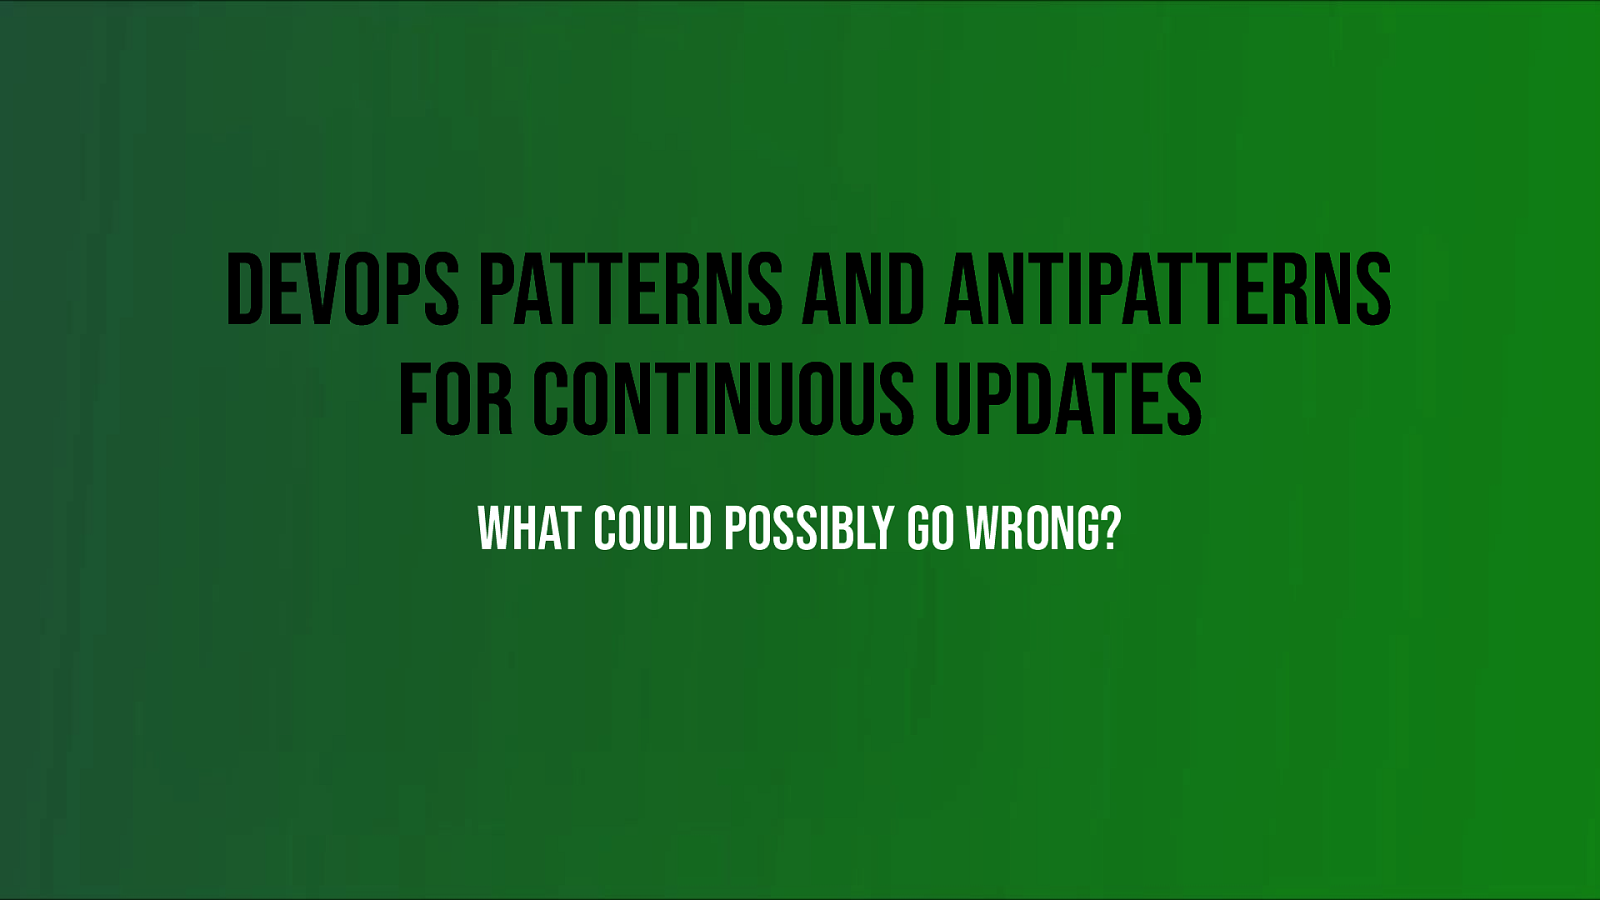 DevOps Patterns & Antipatterns for Continuous Software Updates